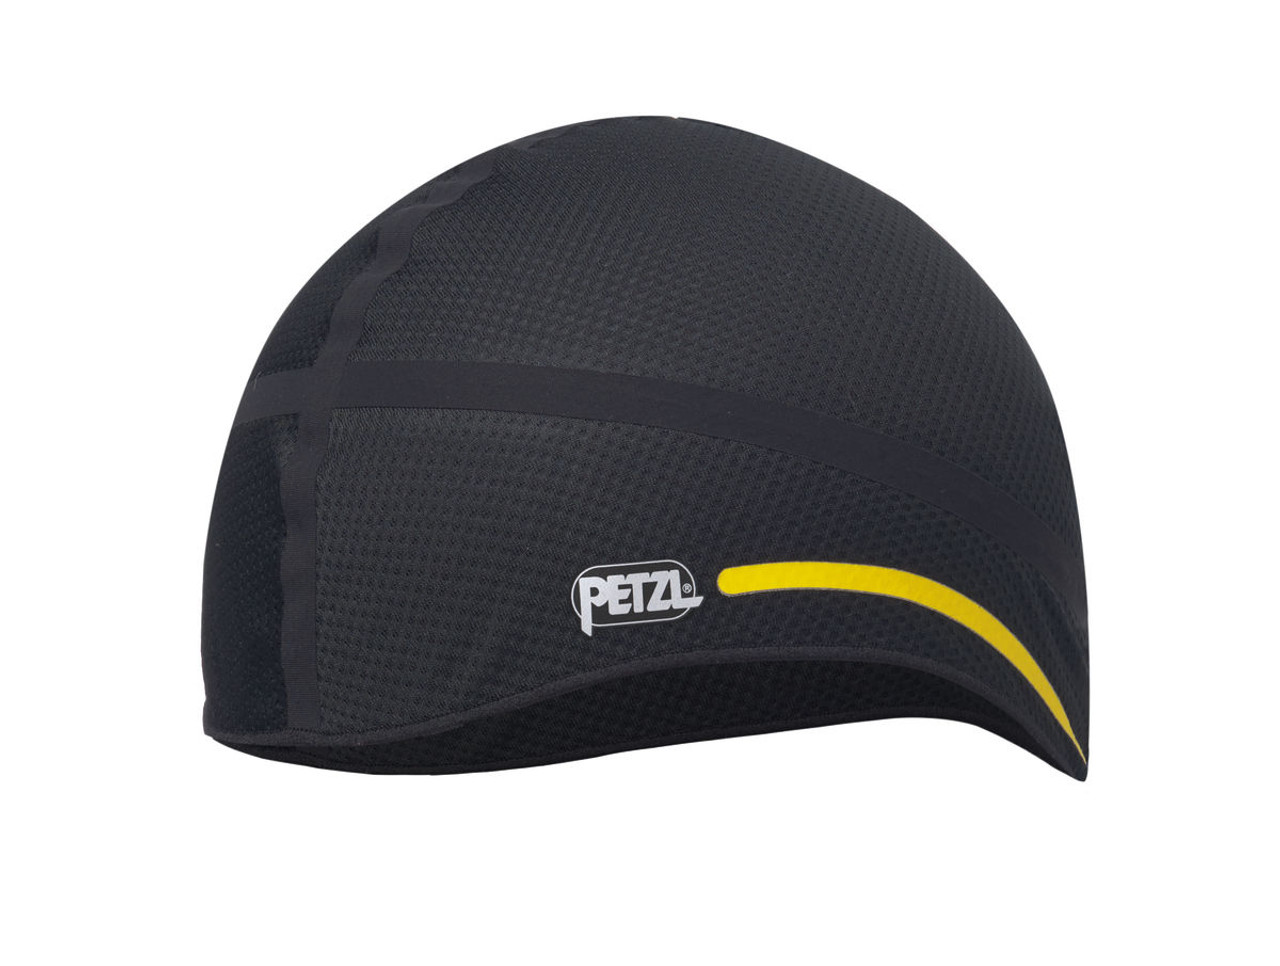 Petzl Liner for Helmets